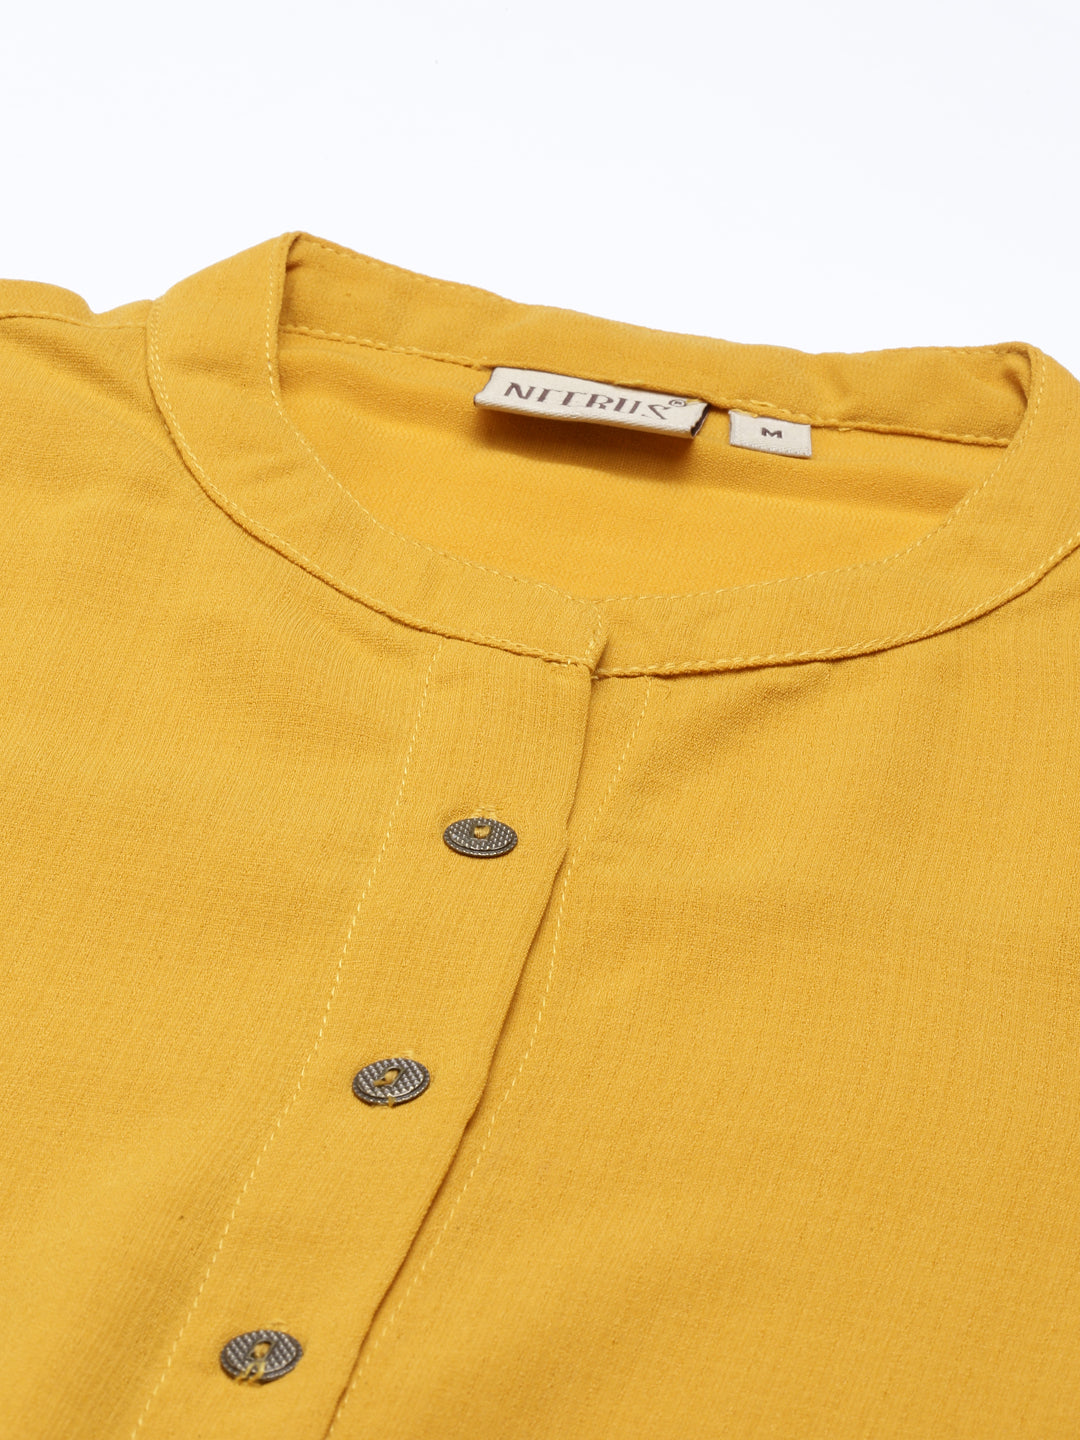 Neeru's Mustard Color Slub Rayon Fabric Kurta